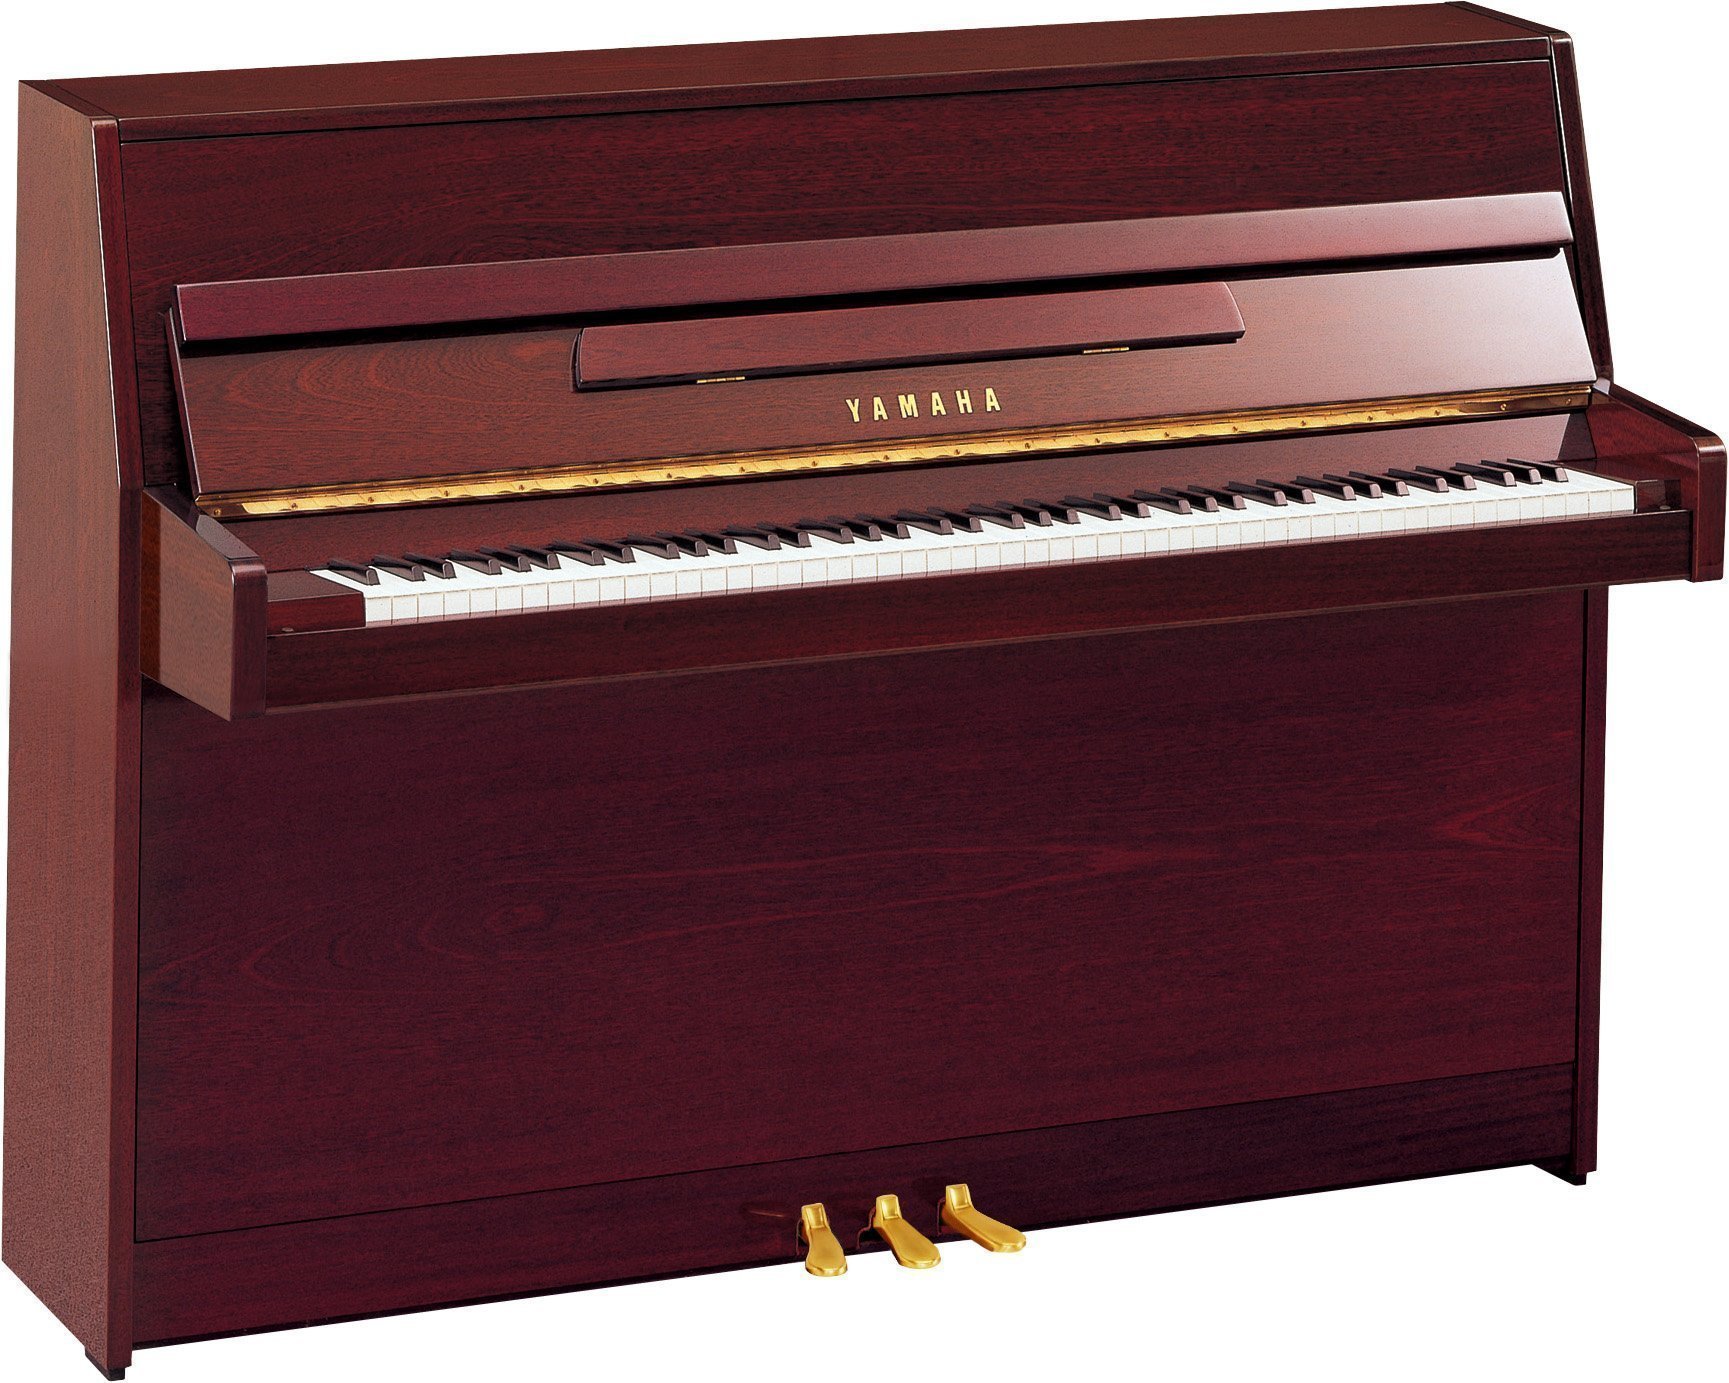 Piano Yamaha B1 PM Polished Mahogany